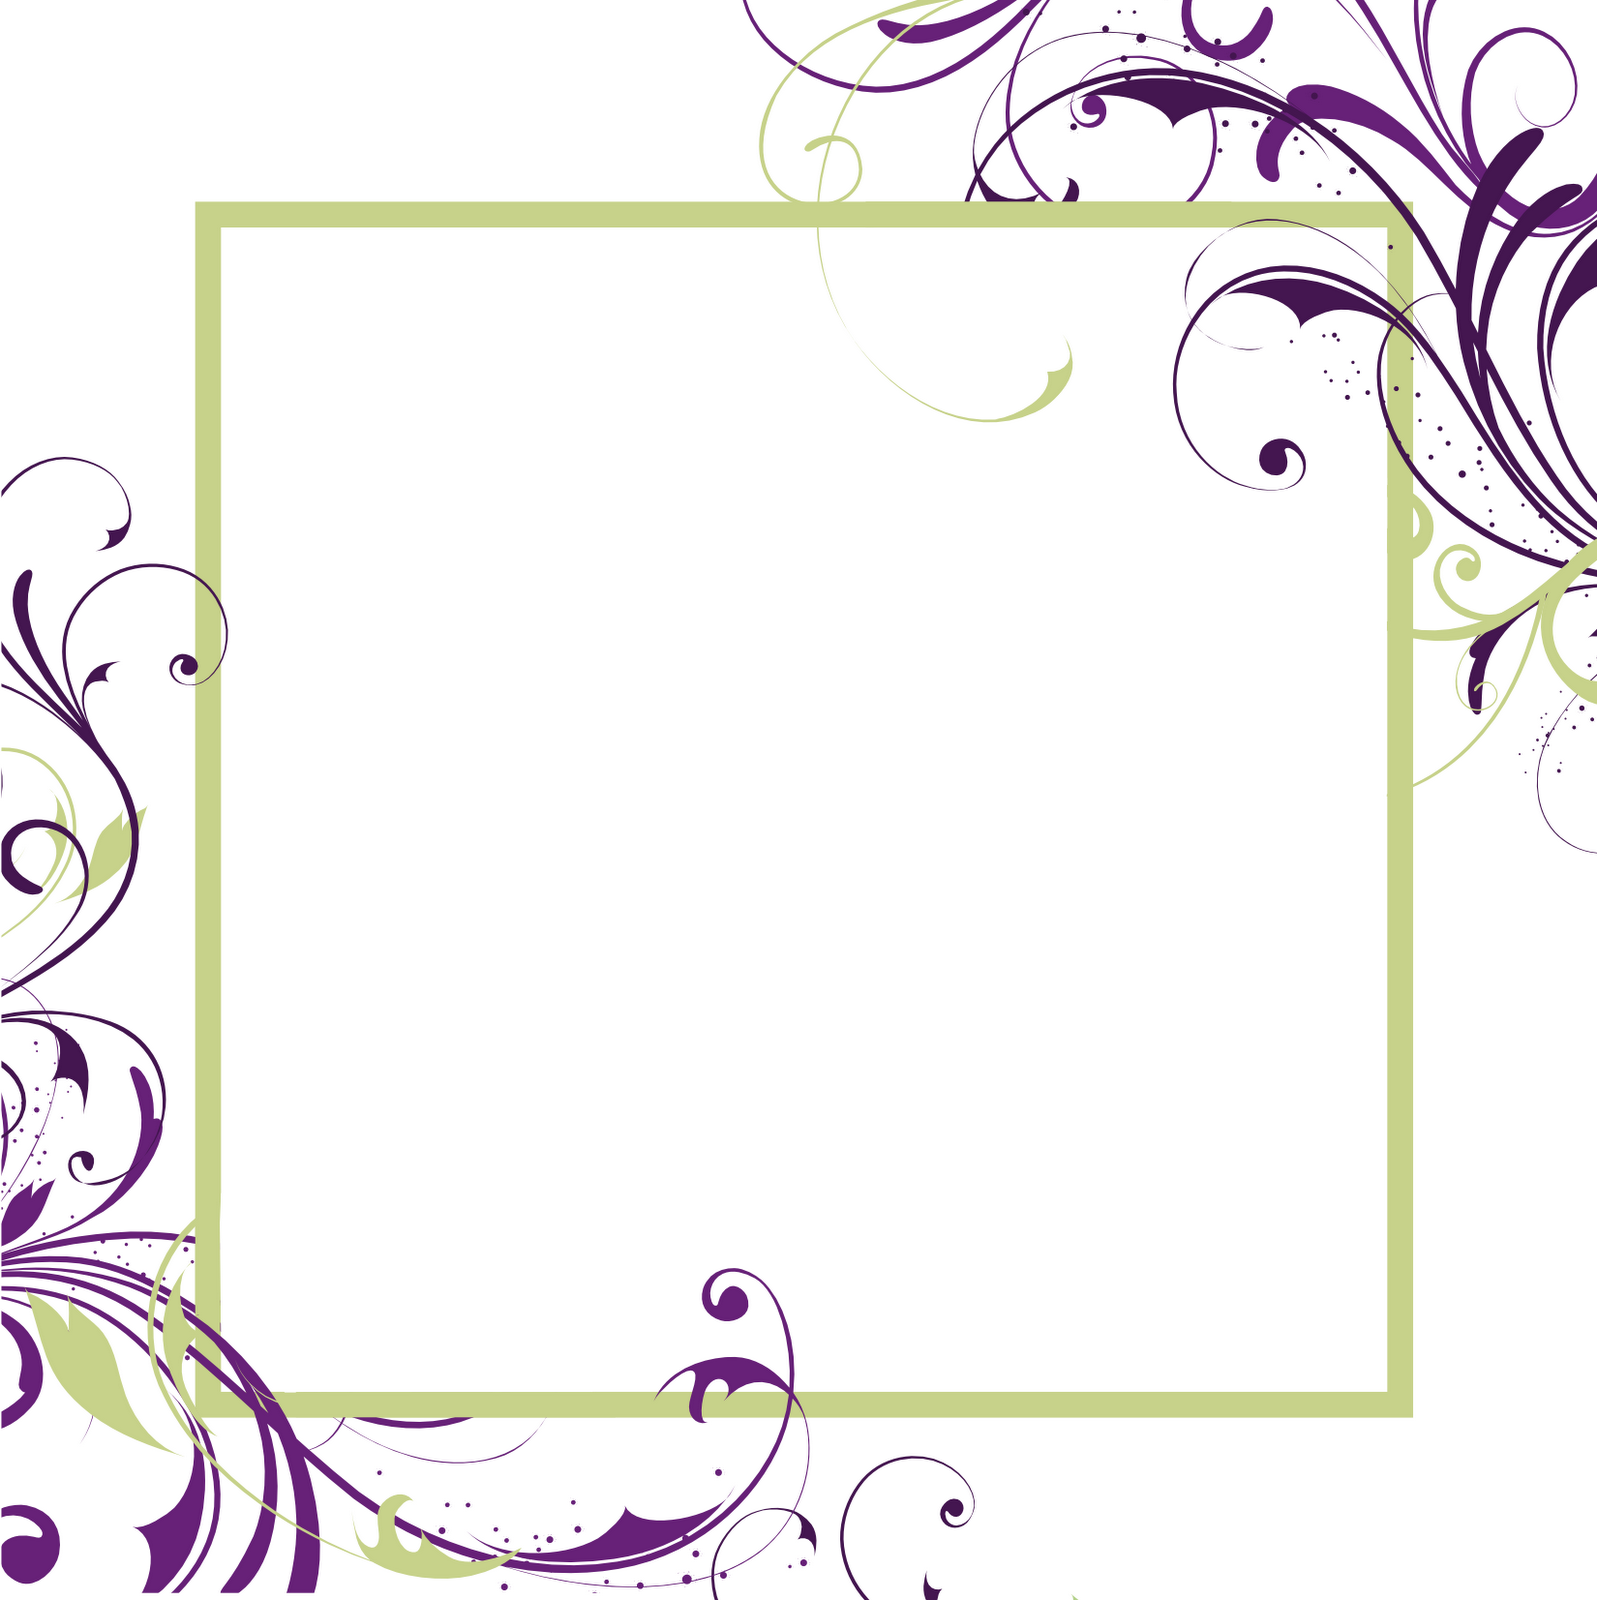 51 Blank Blank Invitation Card Designs in Photoshop for Blank Invitation Card Designs